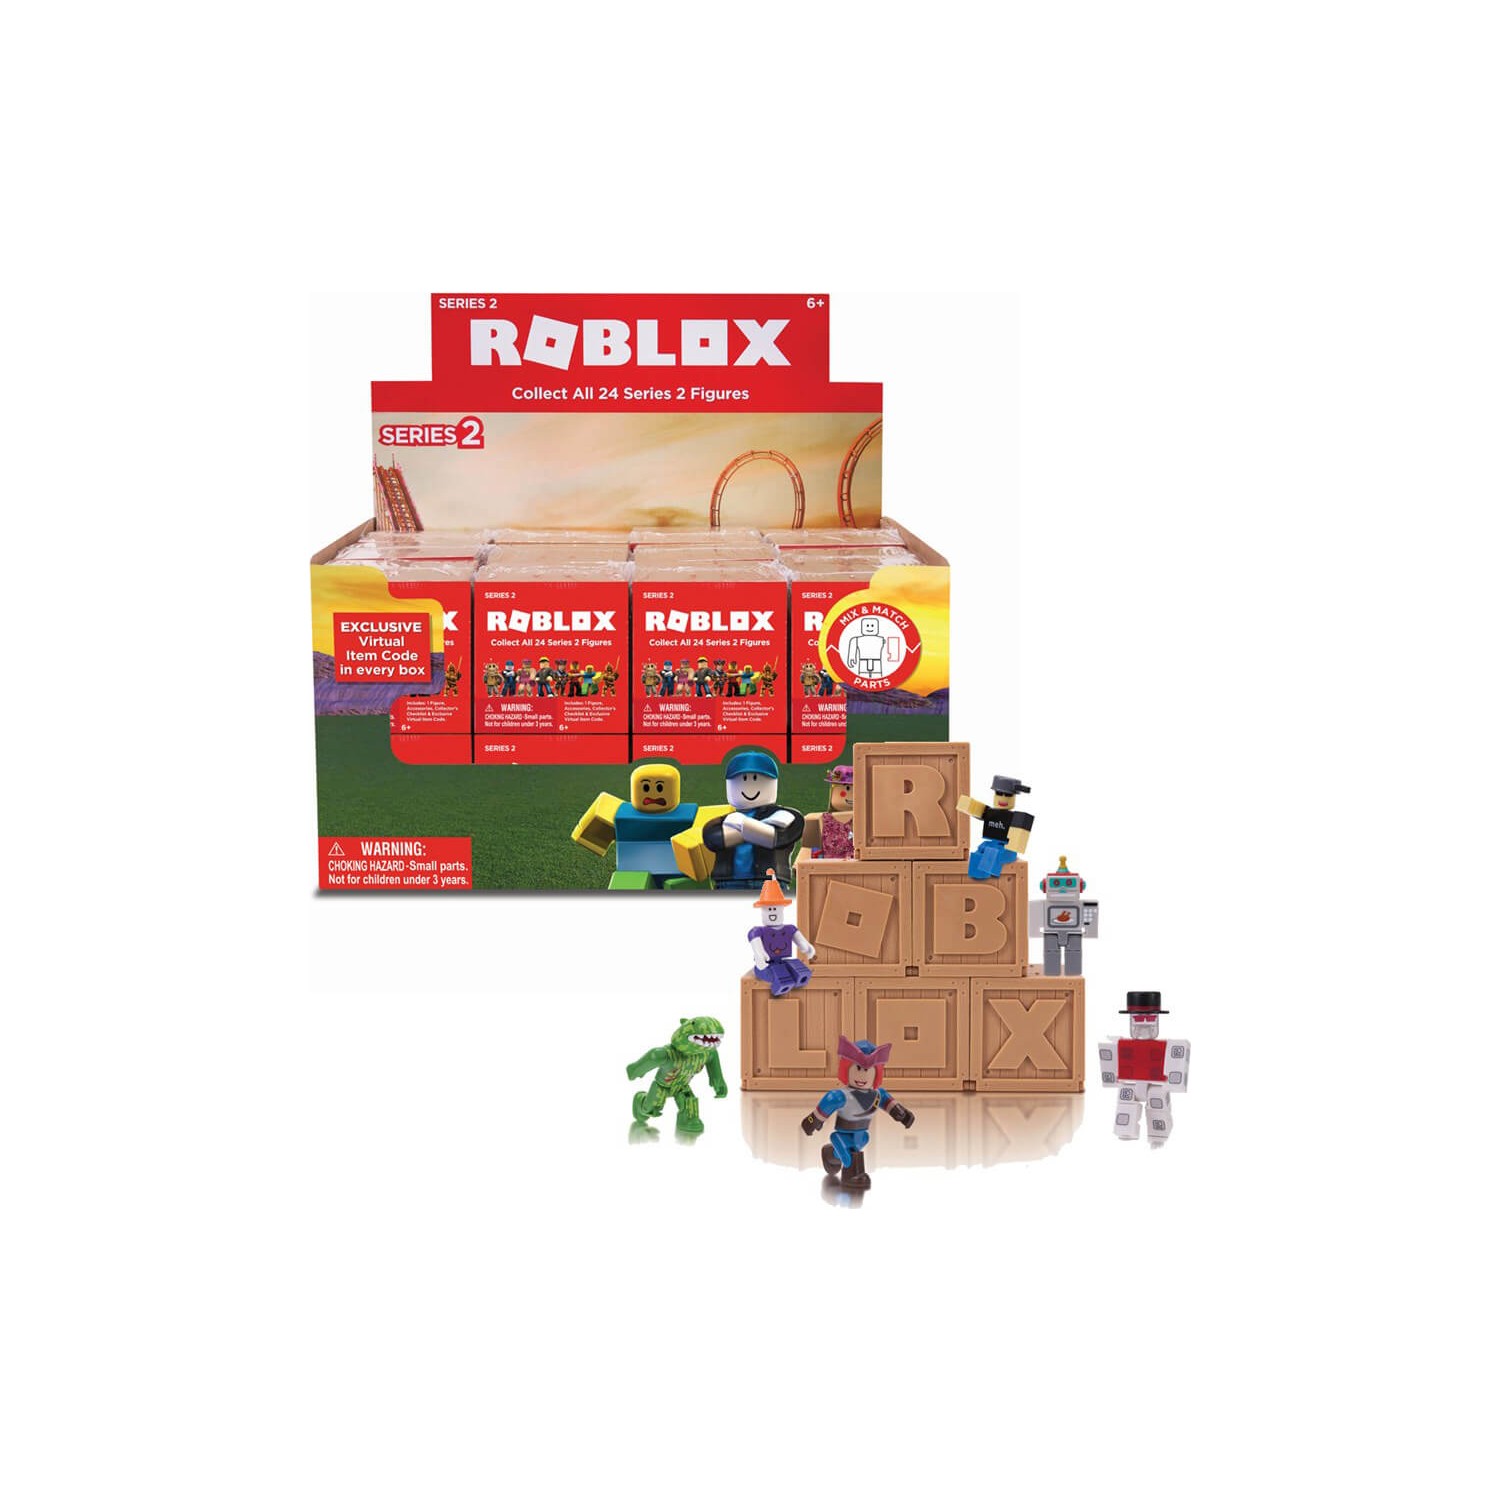 Giochi Preziosi Roblox Surpriz Paket S5 10829 Fiyati - roblox beleş eşya kodu youtube